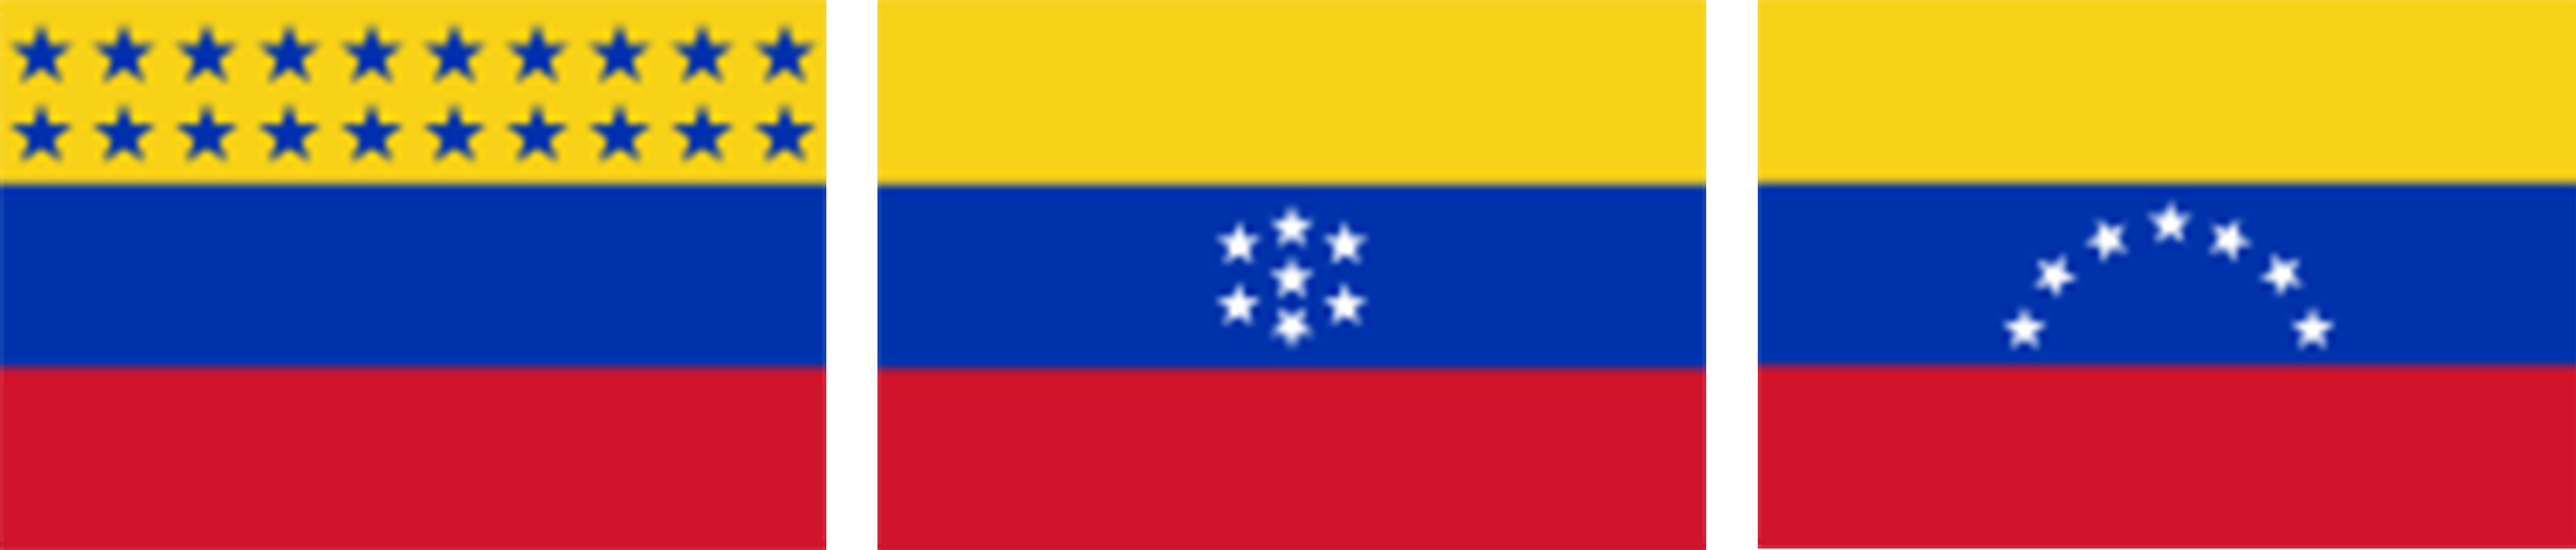 venezuela vlaggen 2